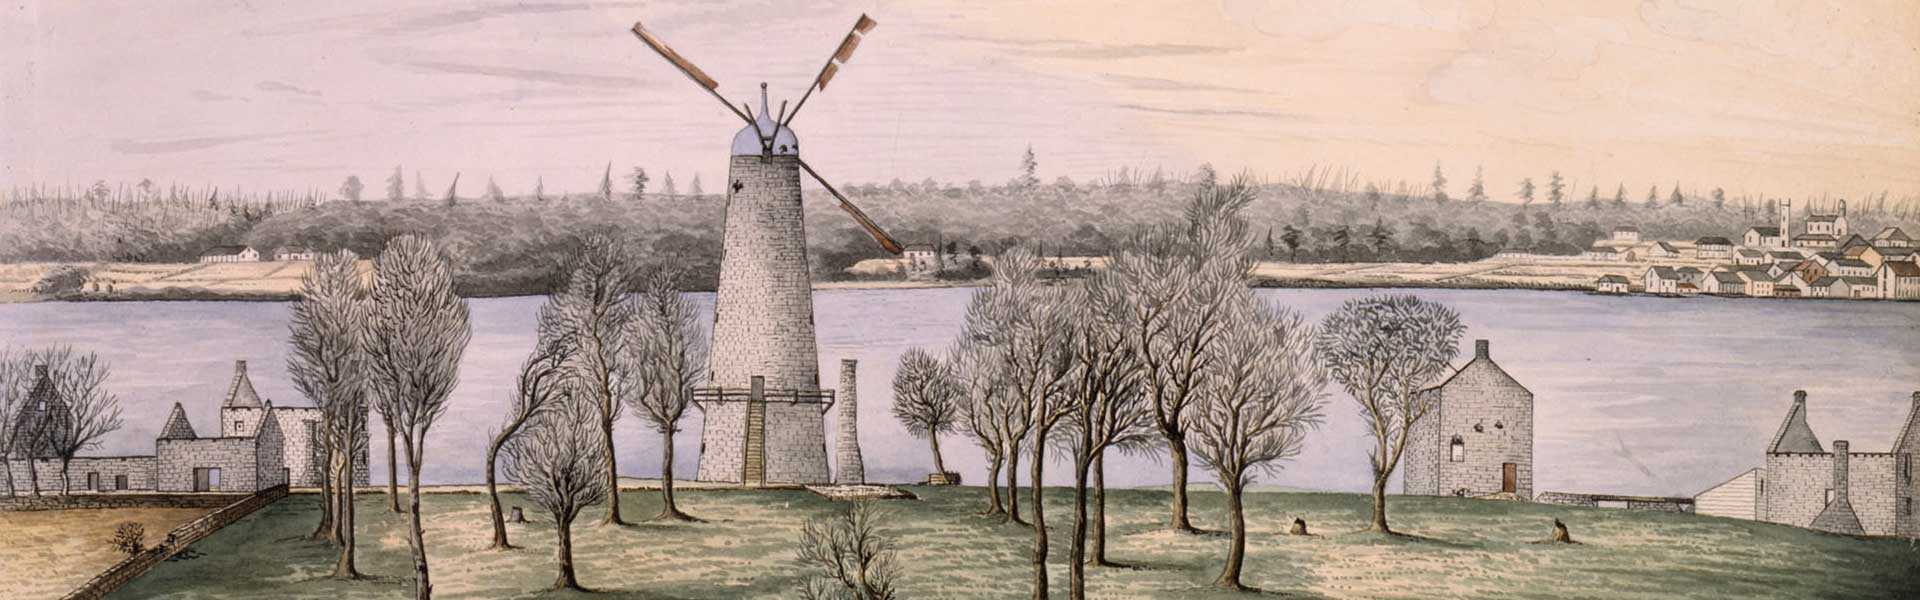 RI Battle of Windmill banner